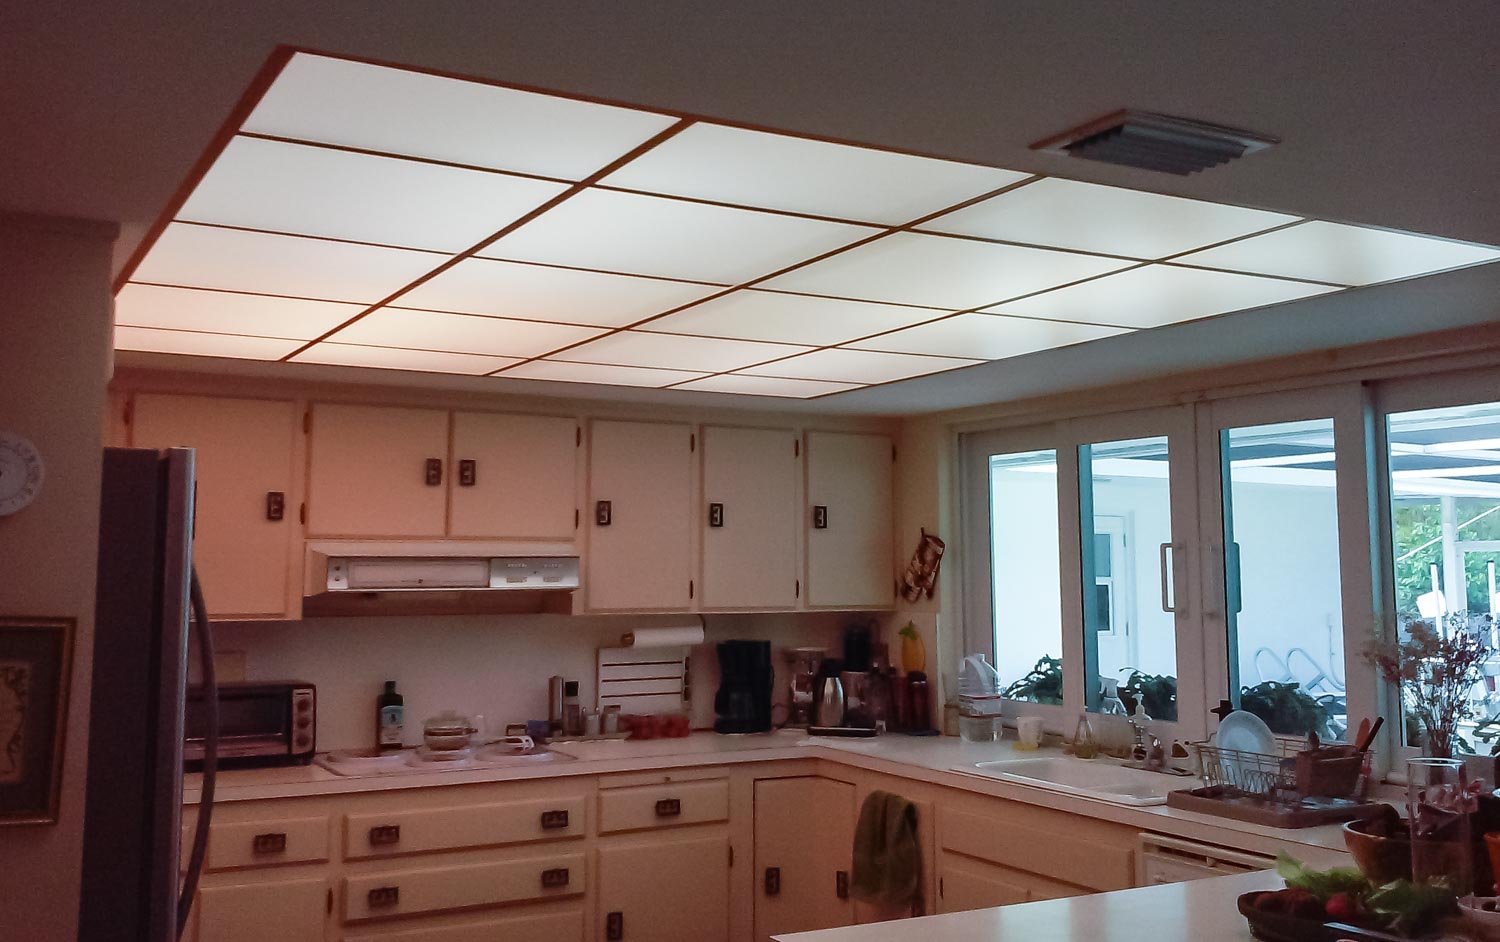 kitchen fluorescent light covers